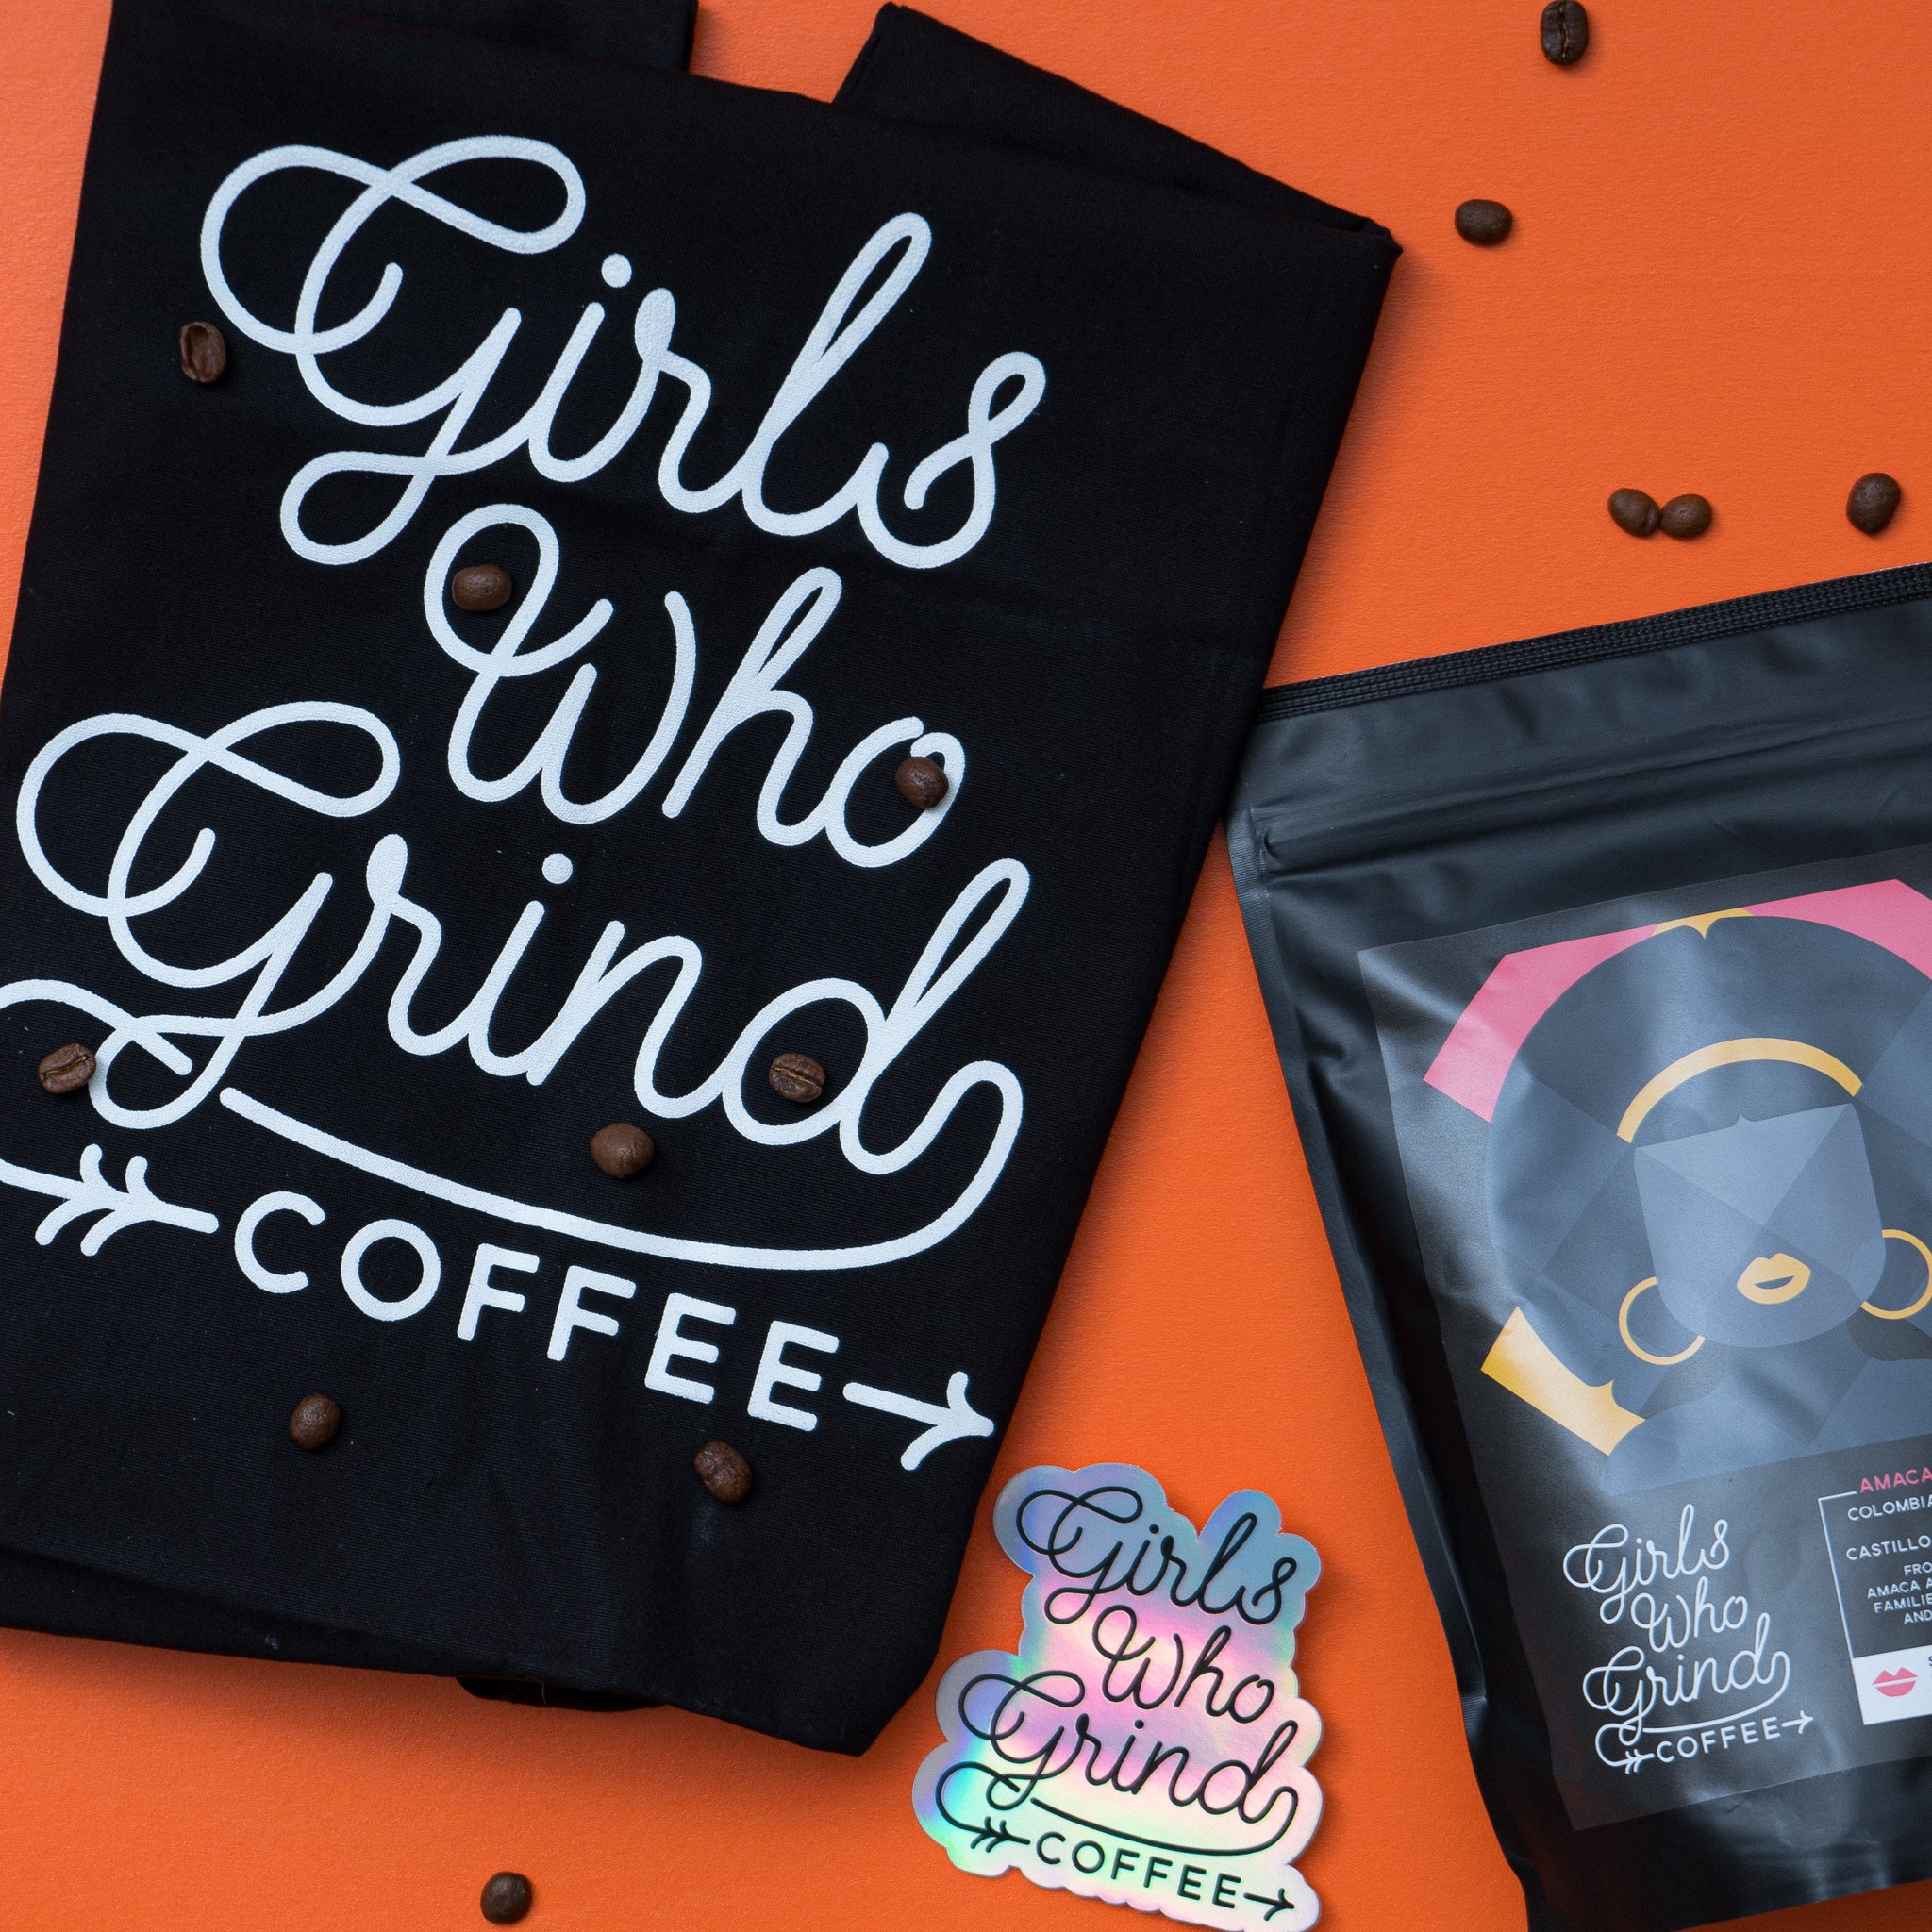 Girls Who Grind Coffee